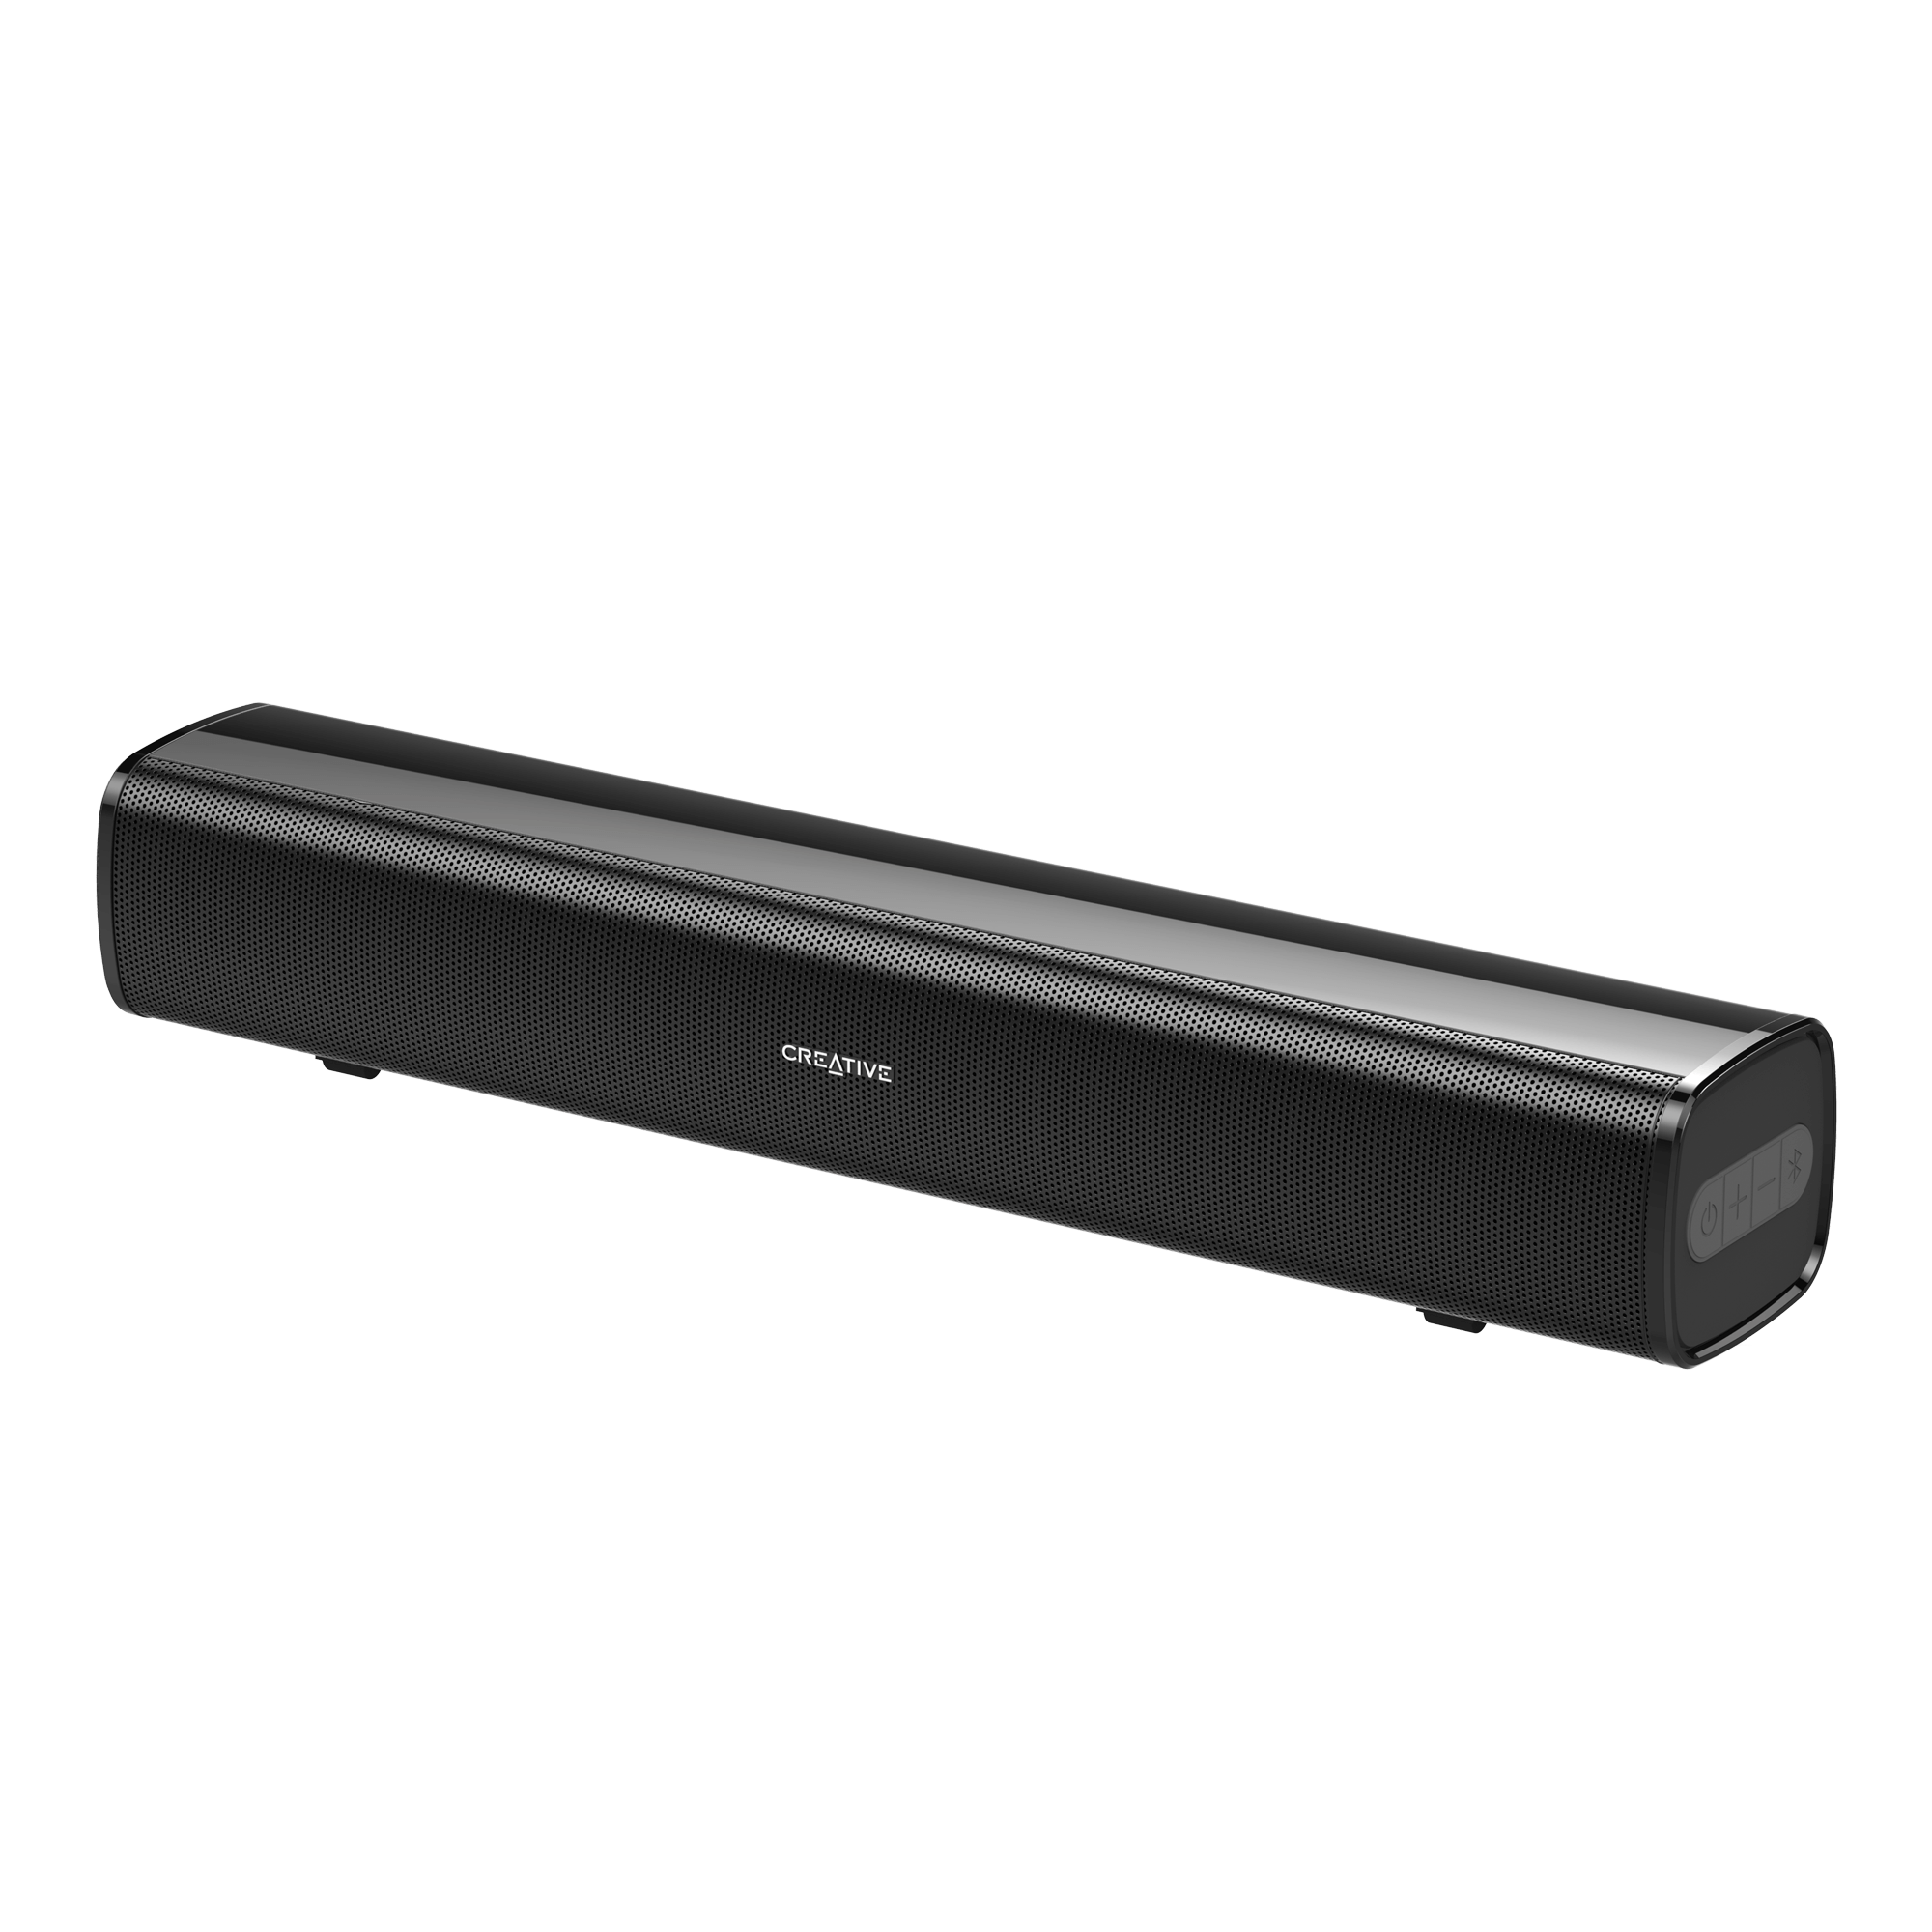 Creative Labs introduces a desktop soundbar speaker as part of an entry-level soundbar range